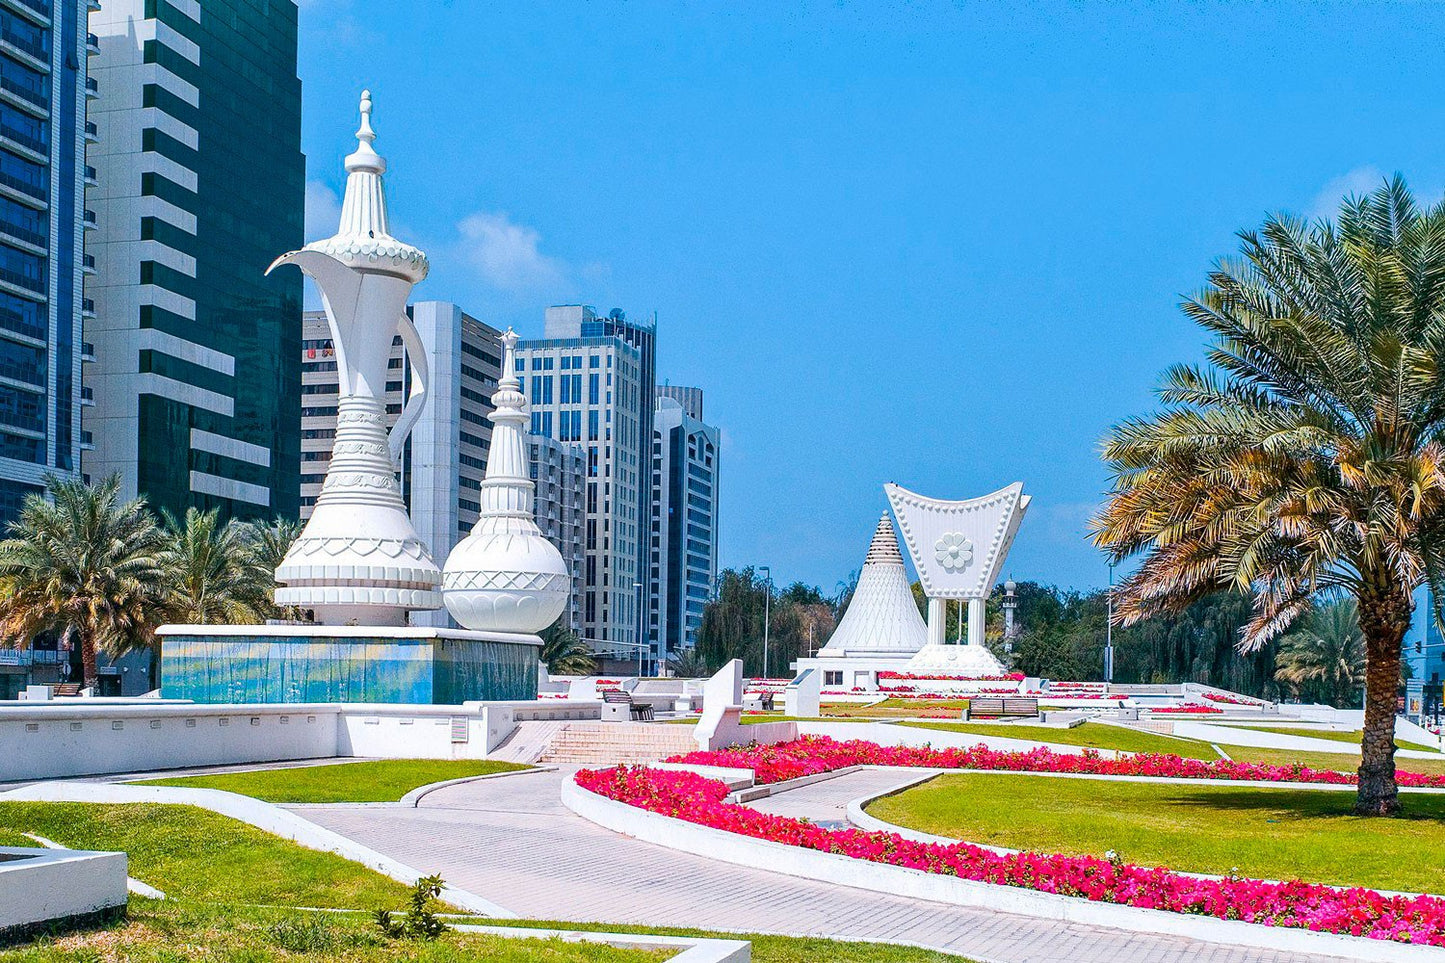 Abu Dhabi City Tour With Ferrari World Admission Ticket from Dubai with Shared Transfers - Tripventura